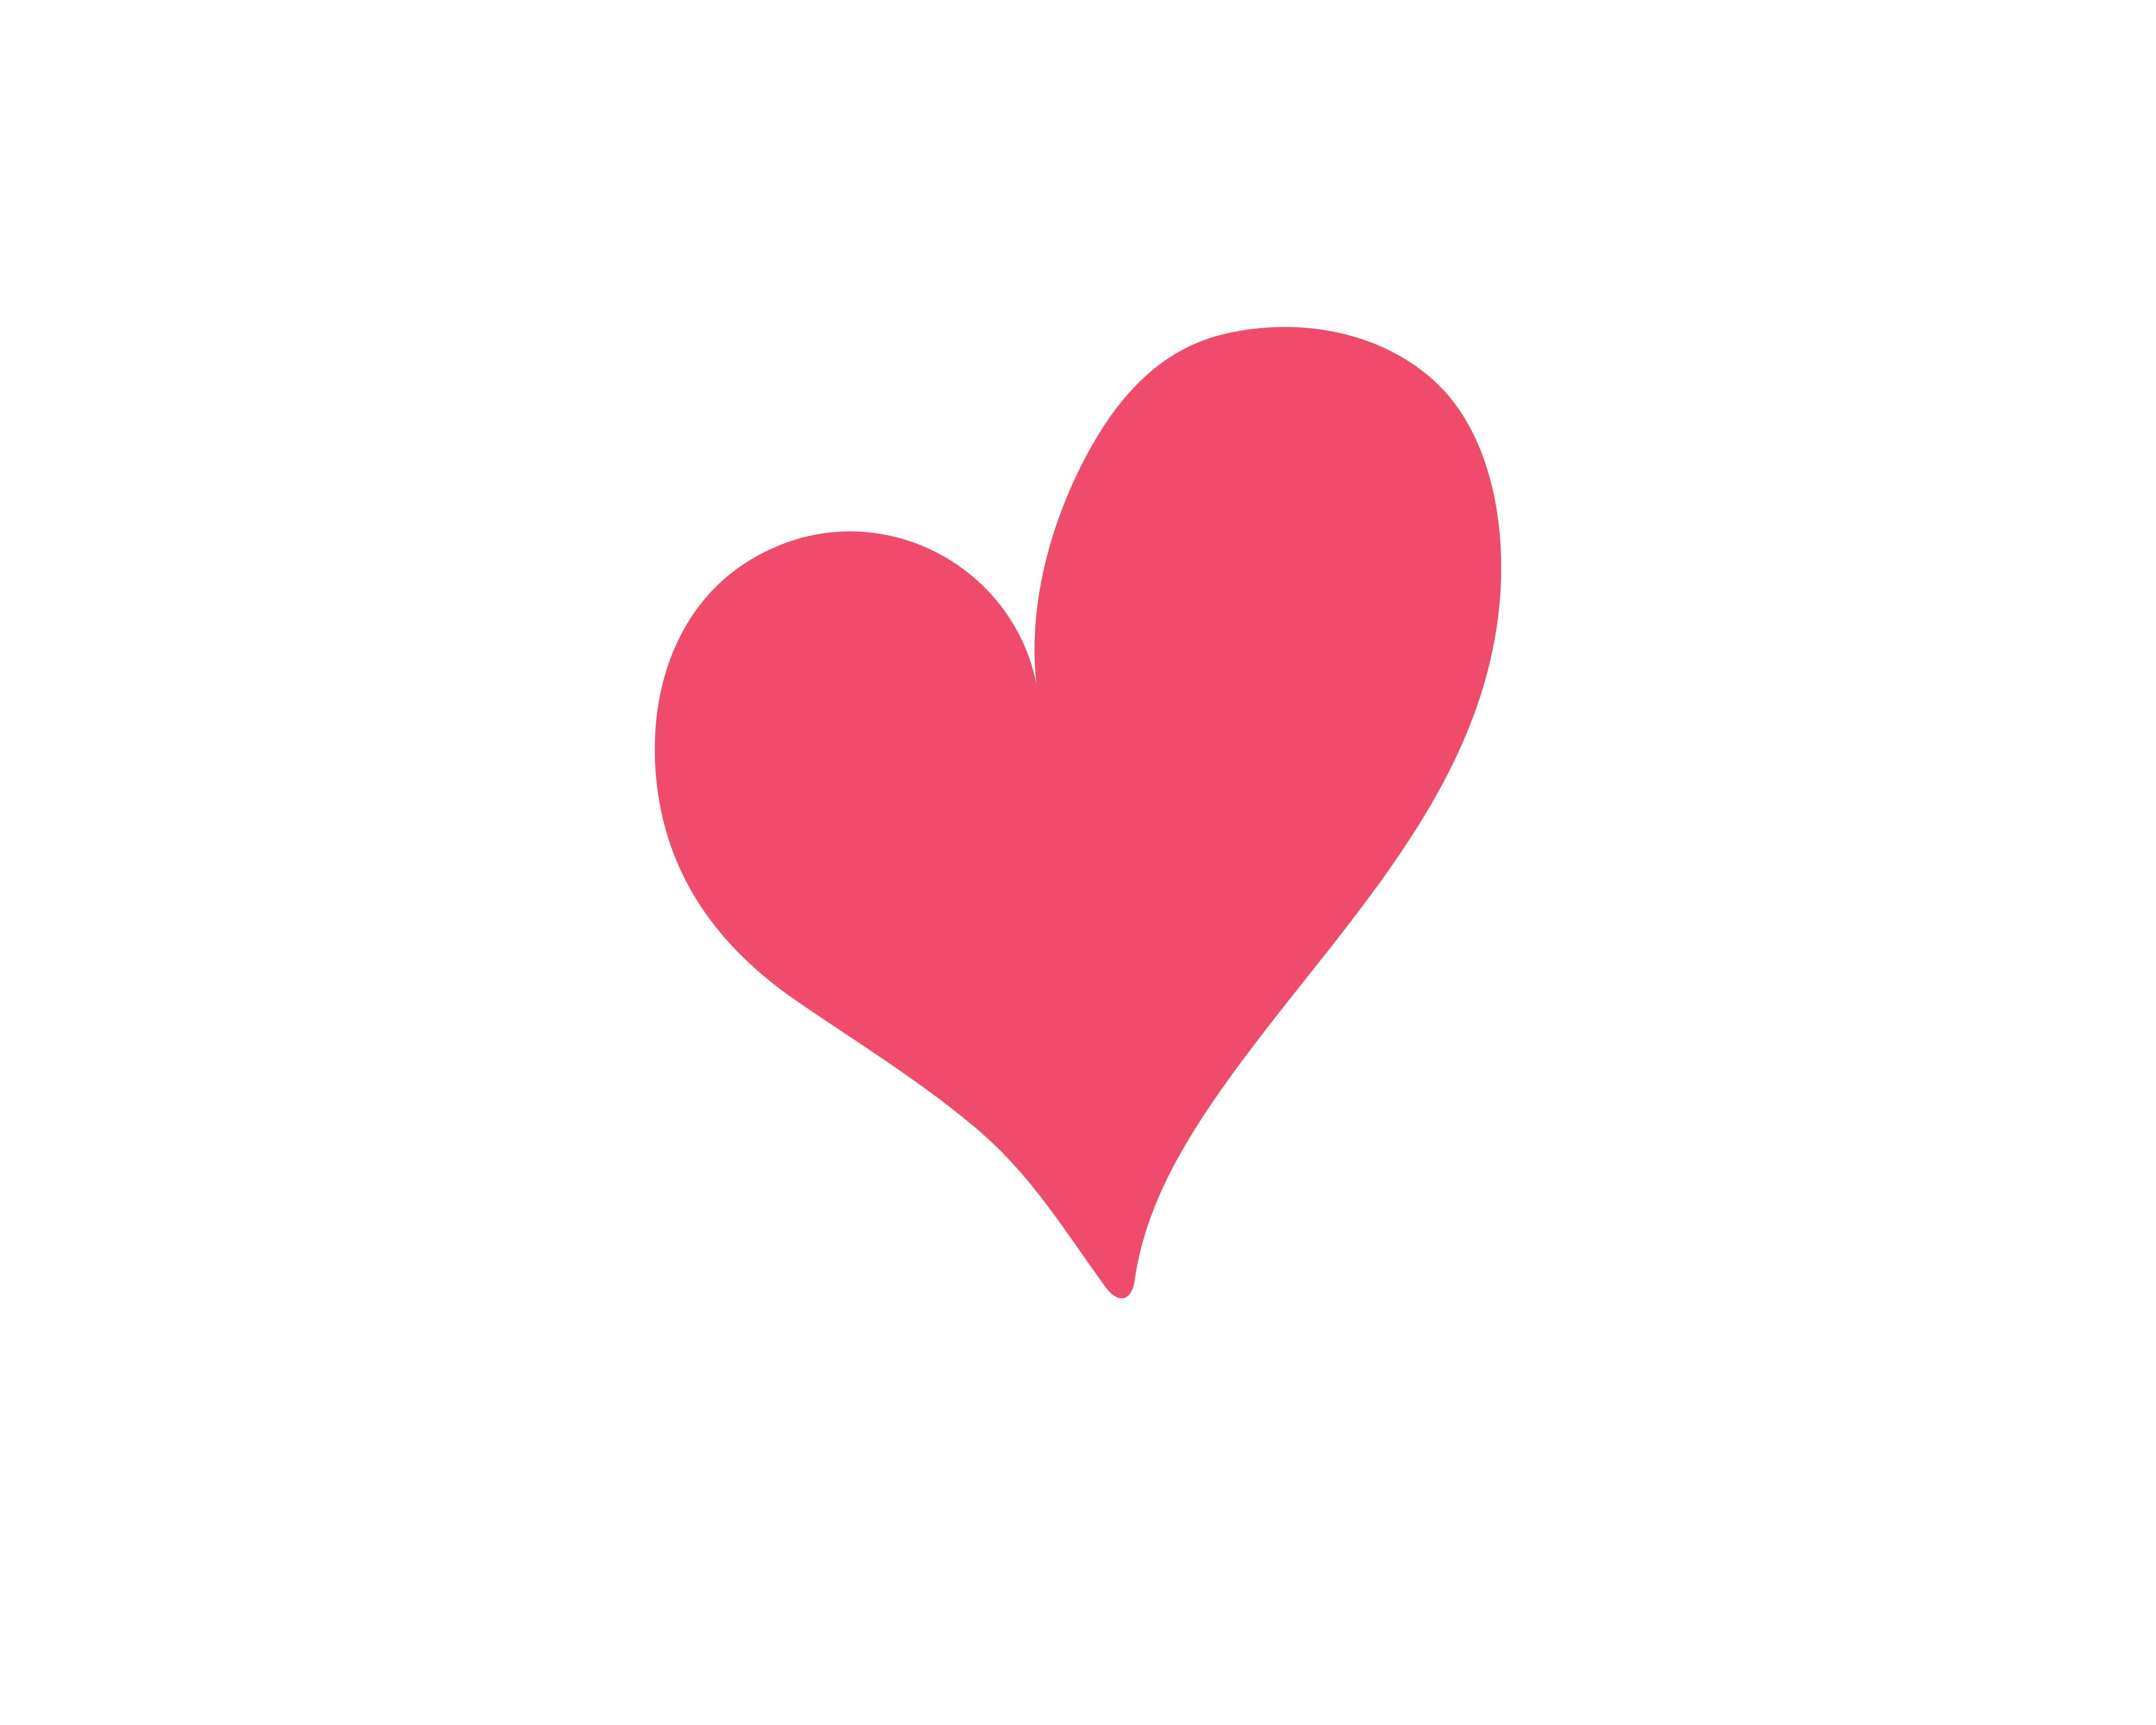 Love heart logo and template 597242 Vector Art at Vecteezy